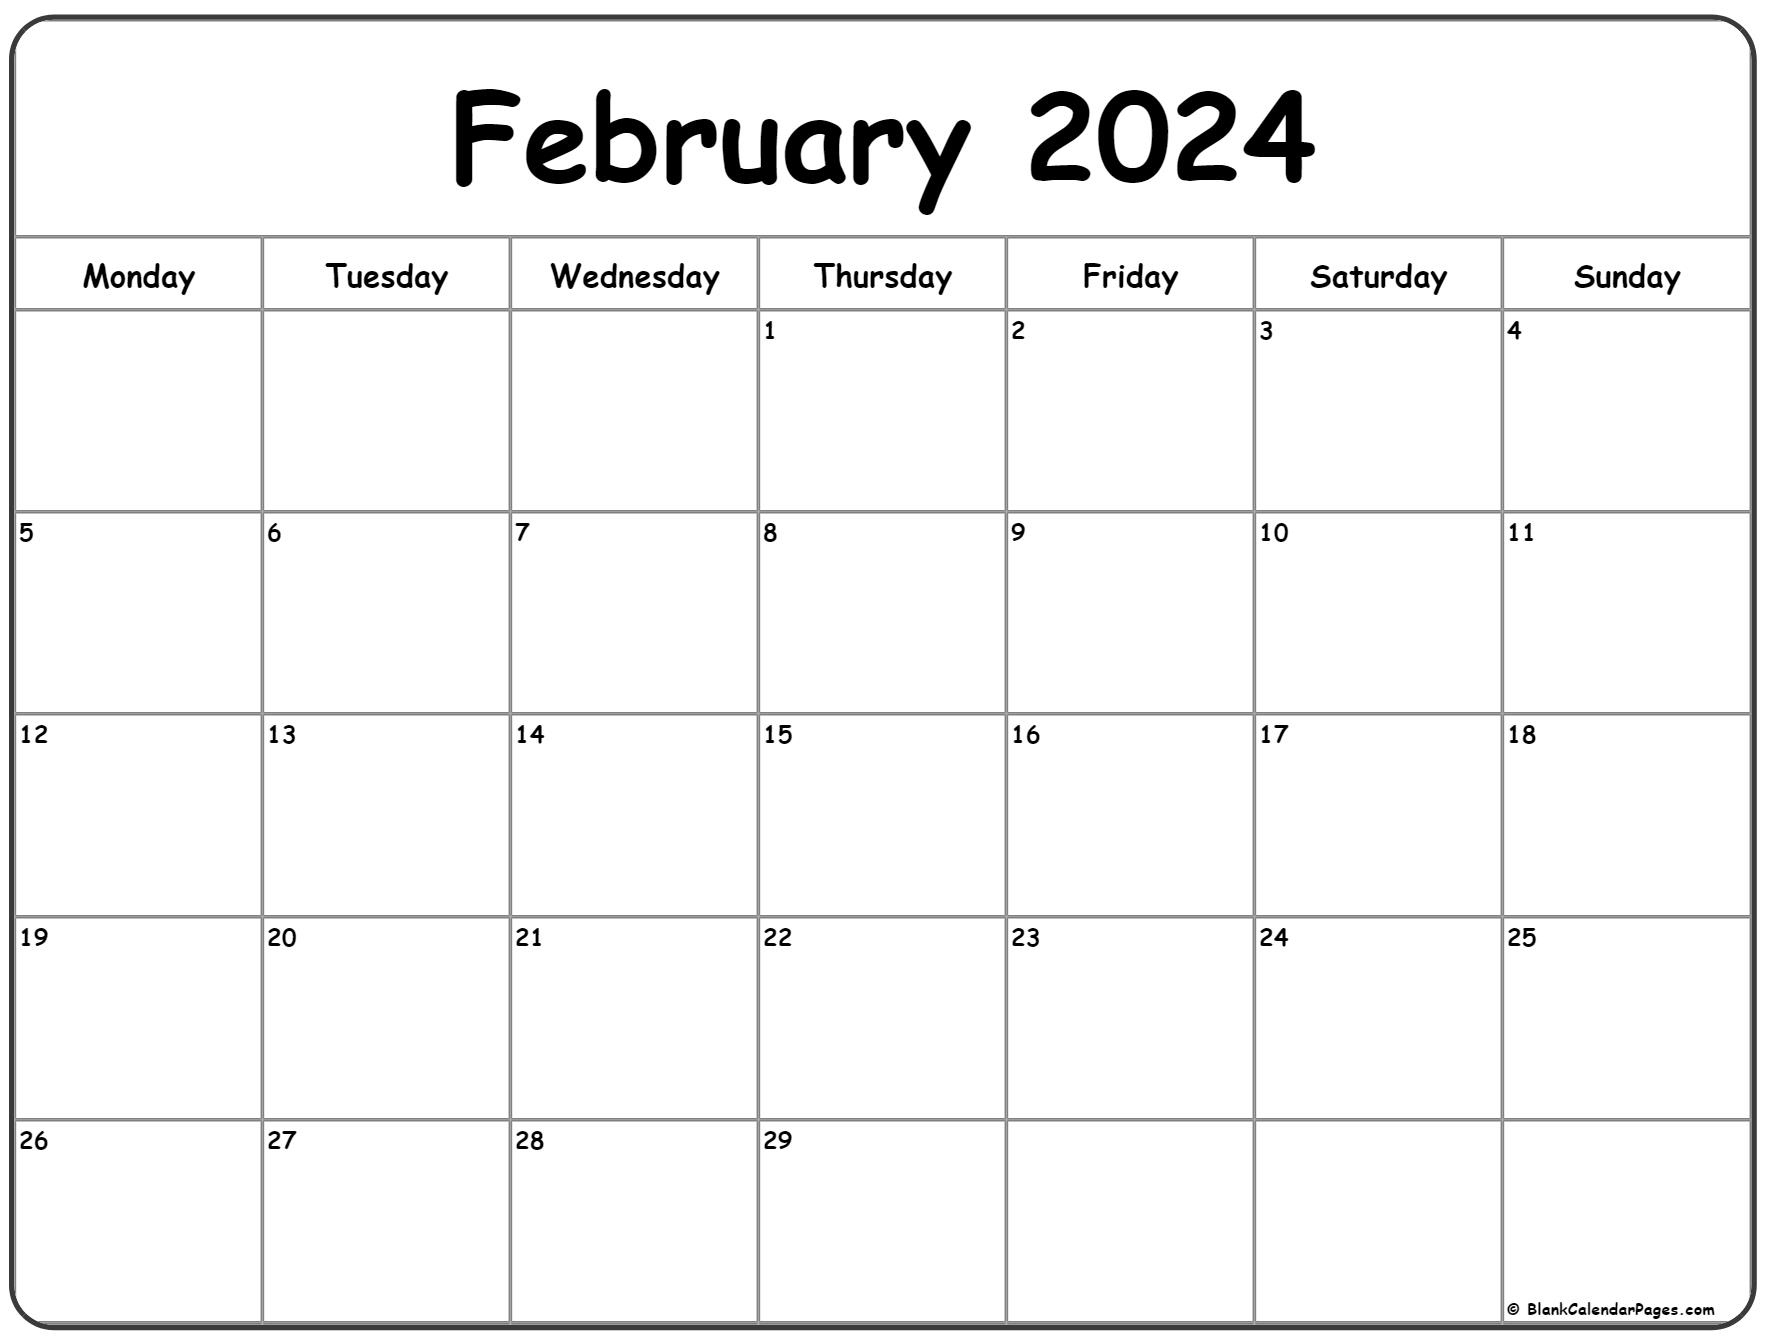 February 2024 Monday Calendar | Monday To Sunday | Printable Calendar 2024 Feb